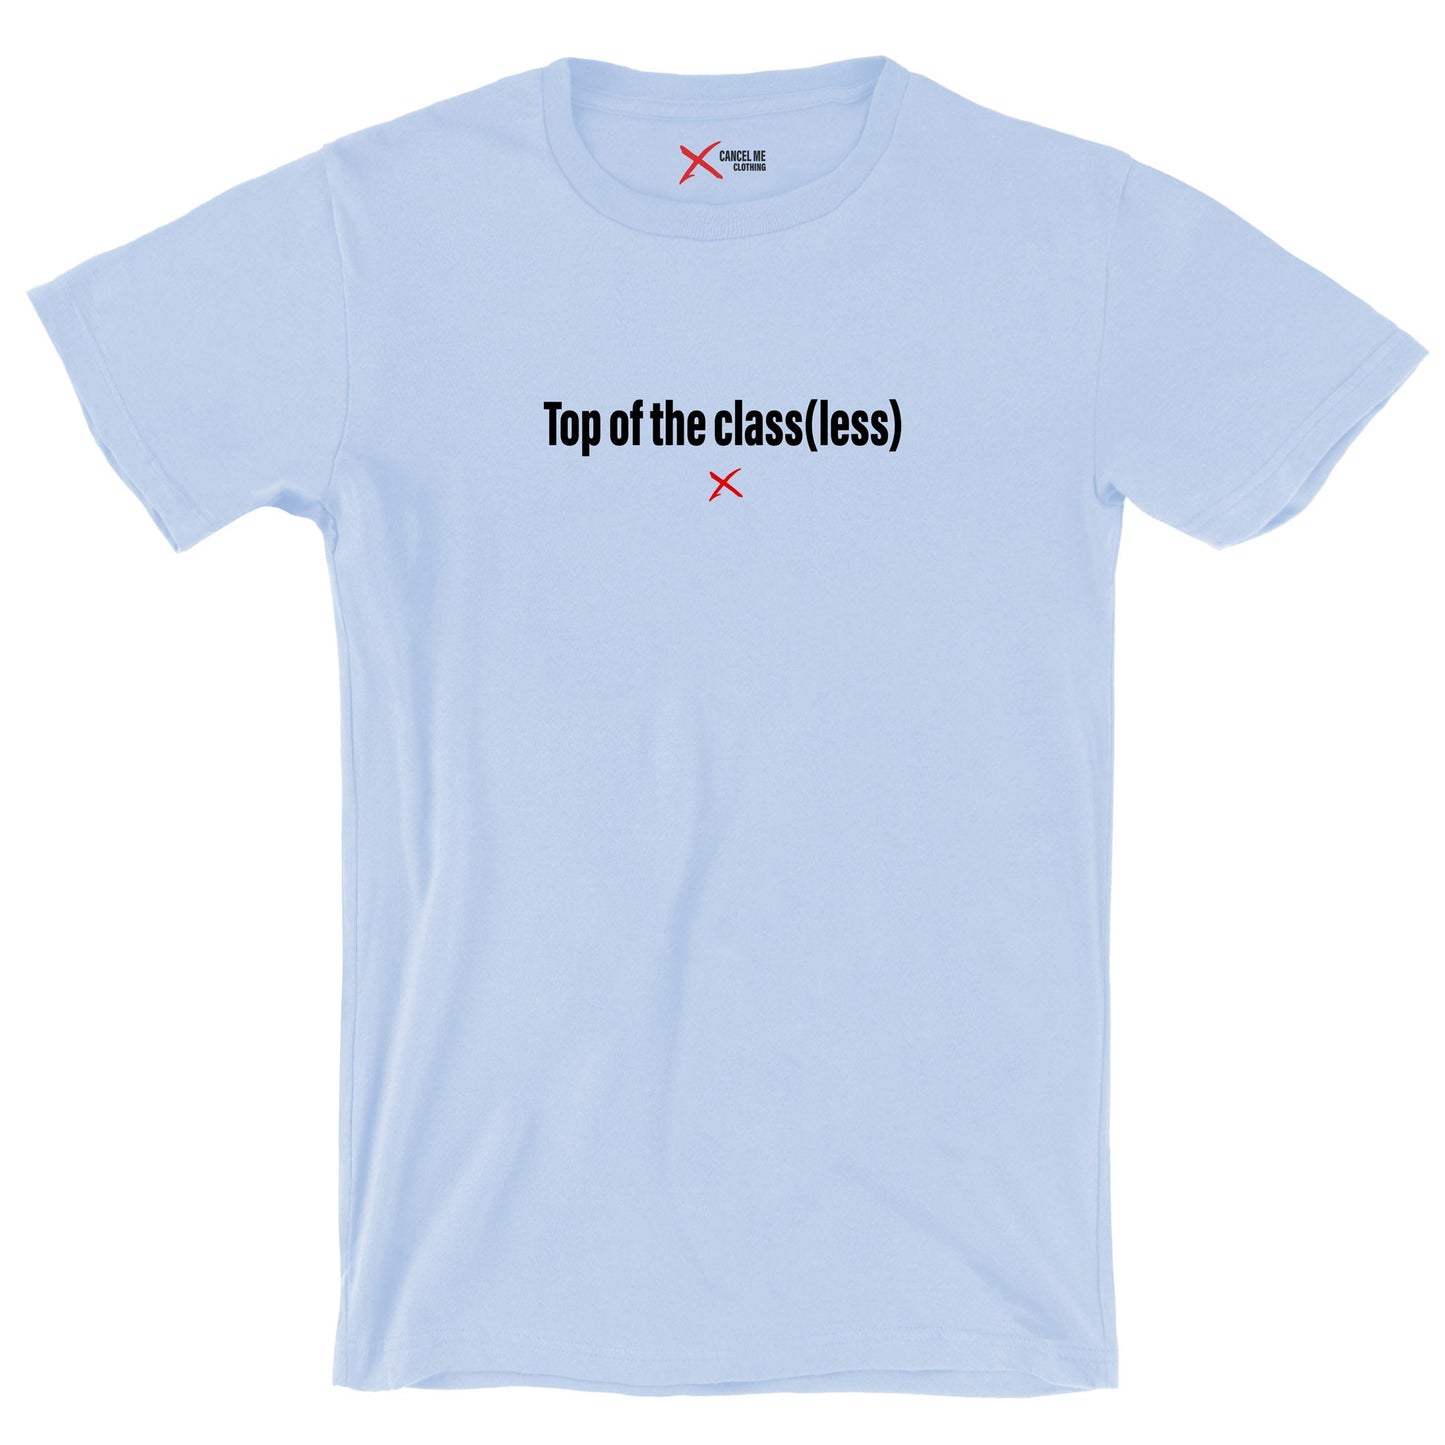 Top of the class(less) - Shirt